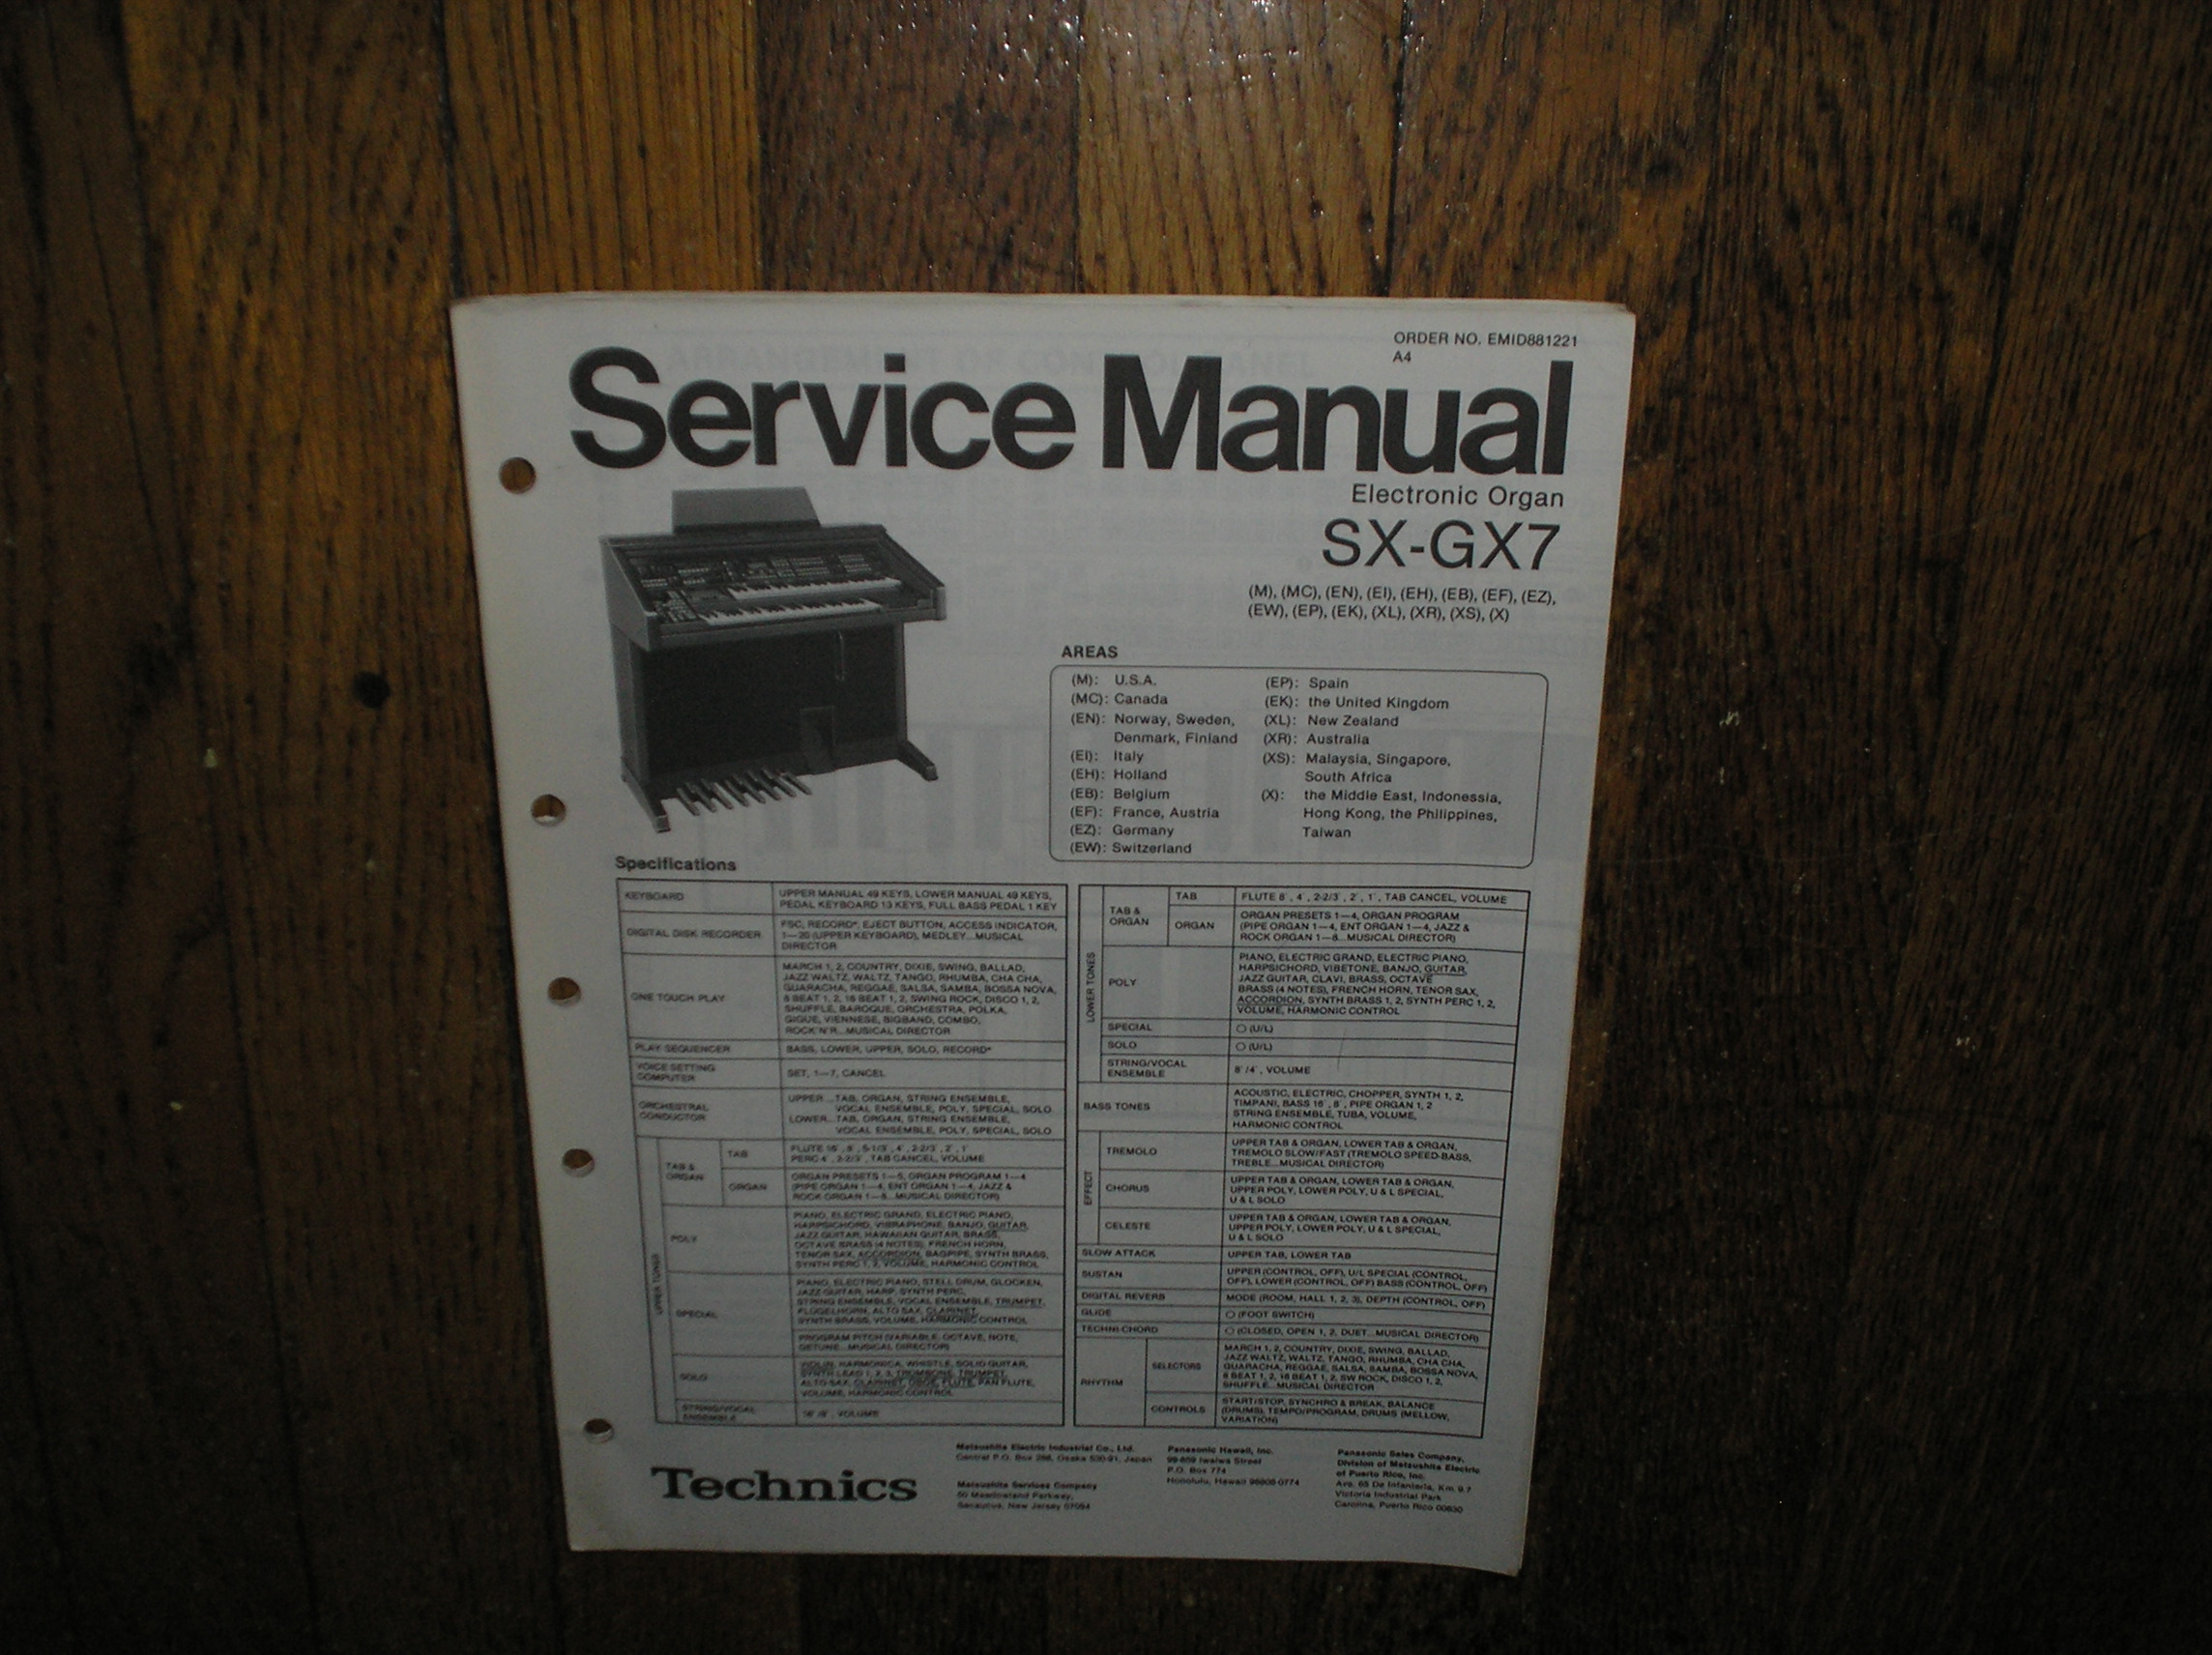 SX-GX7 Electric Organ Service Manual